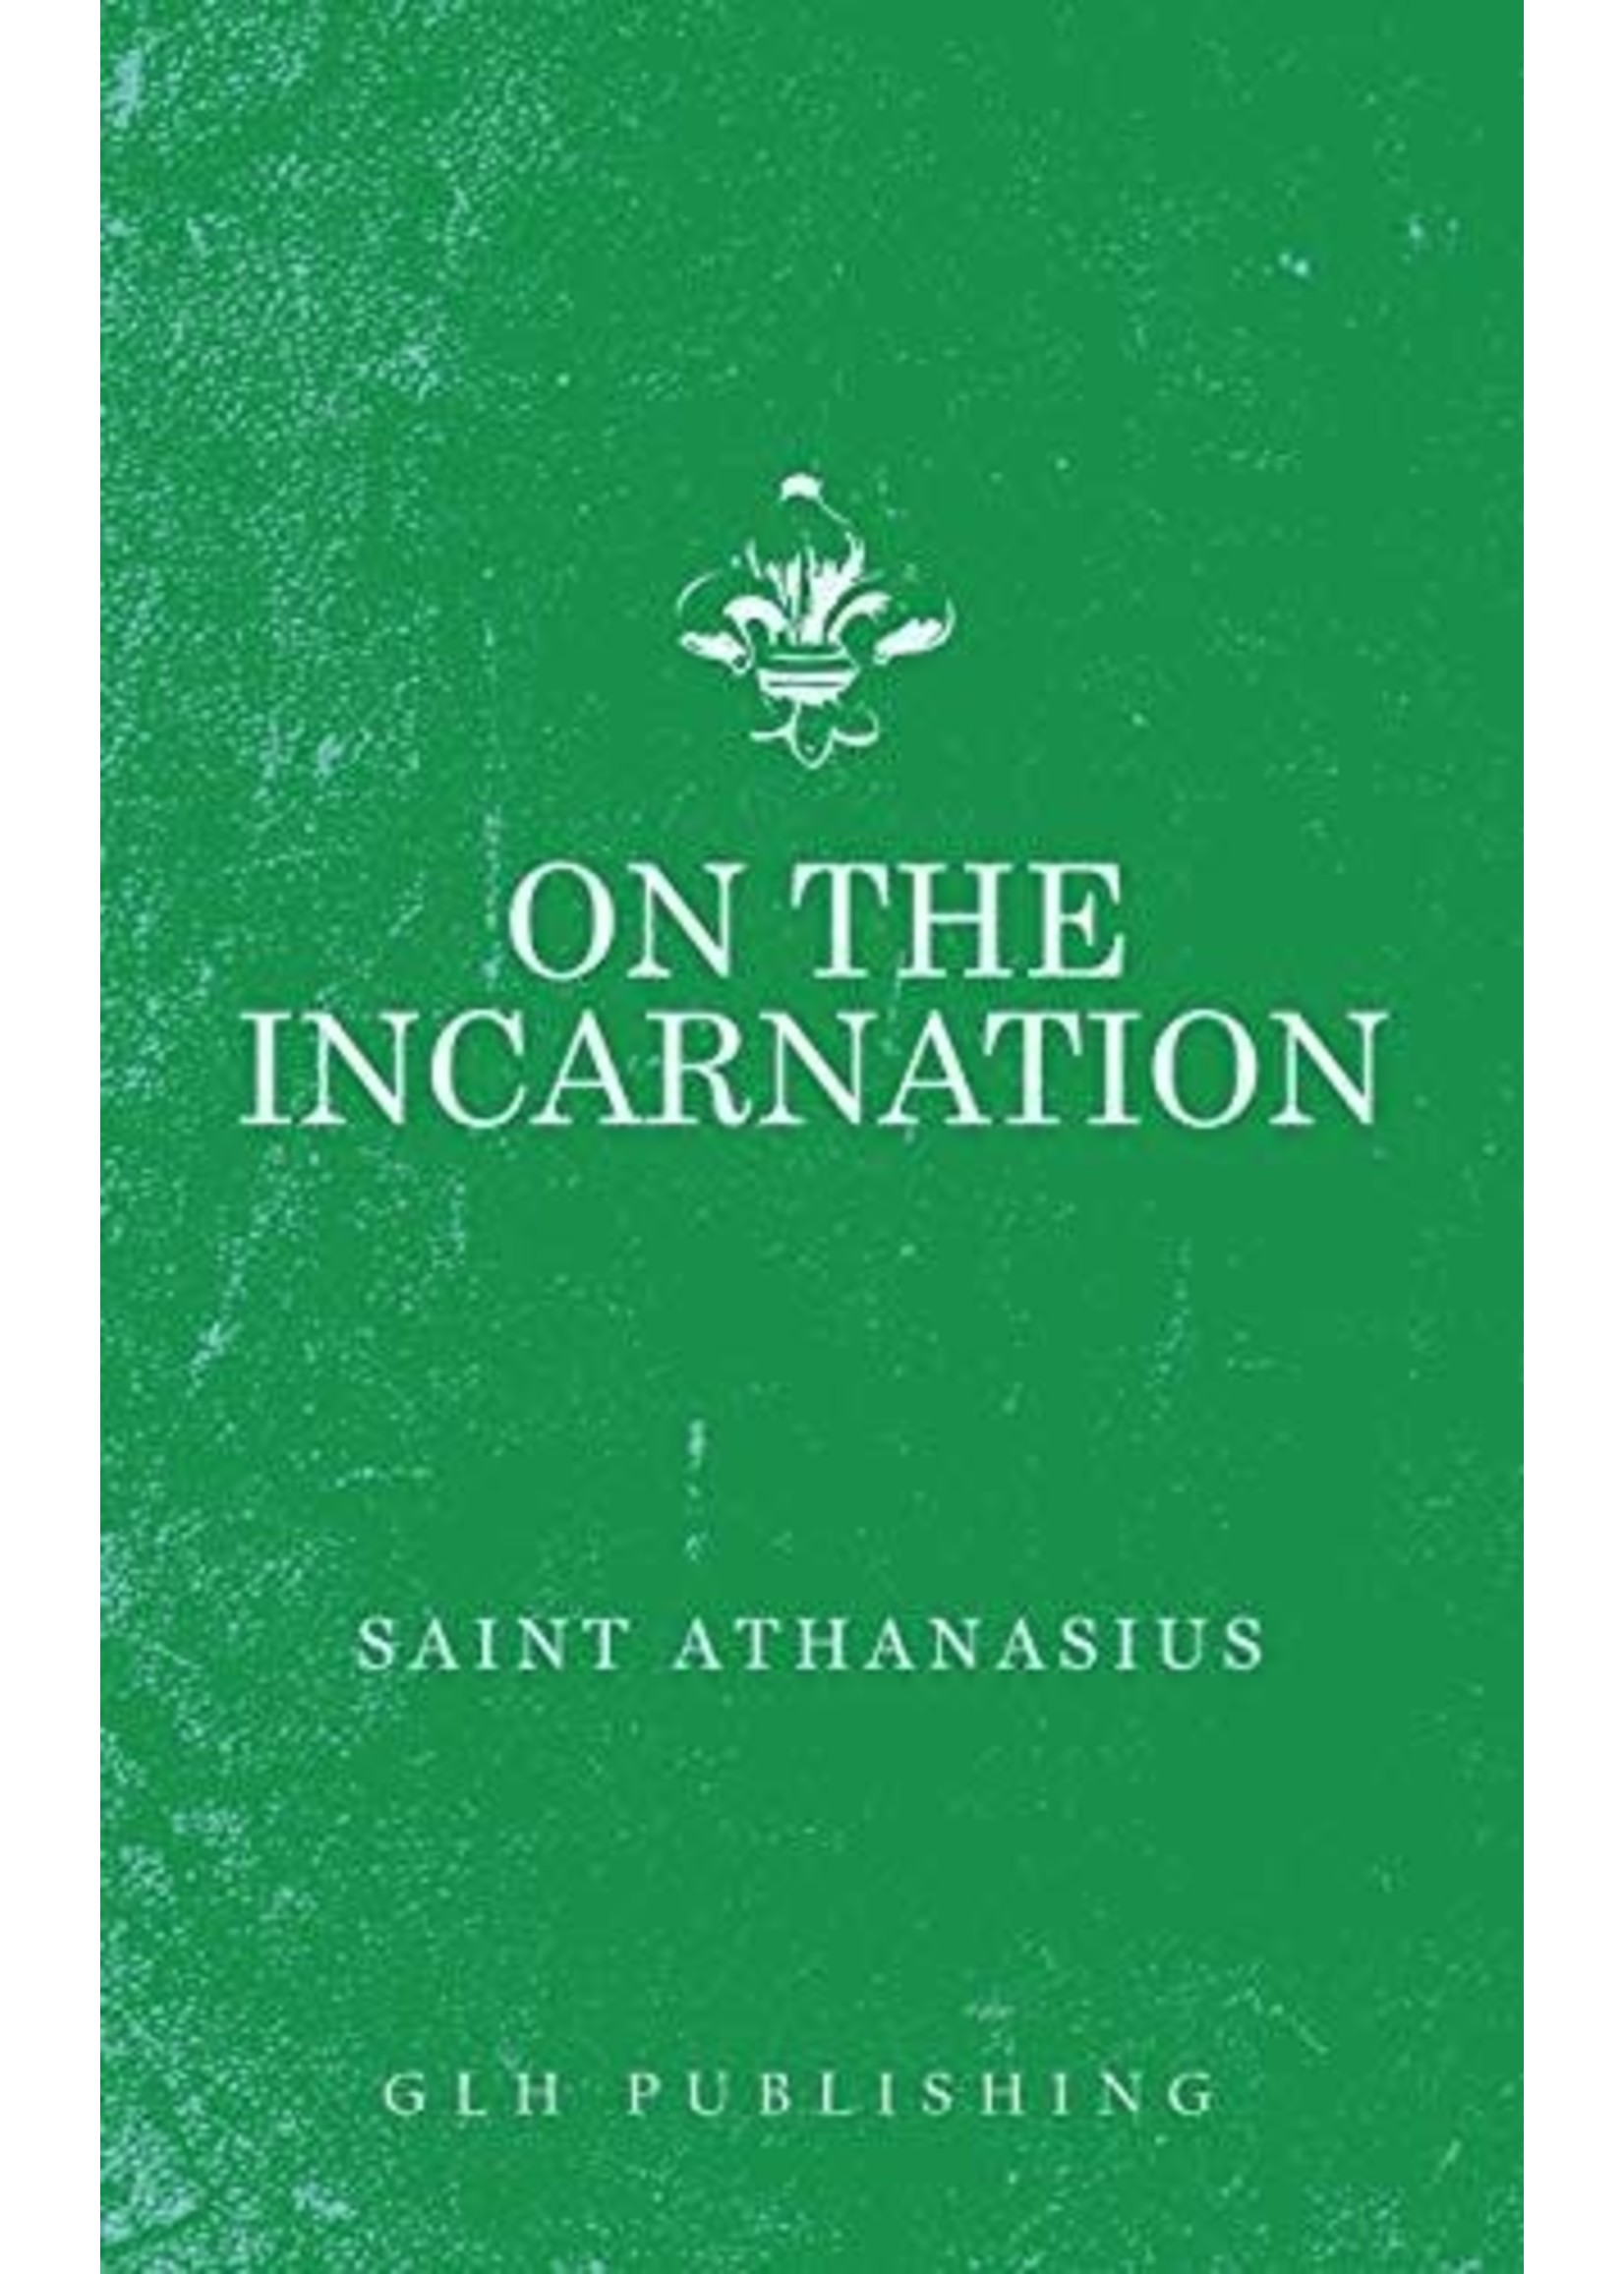 On The Incarnation [Saint Athanasius]